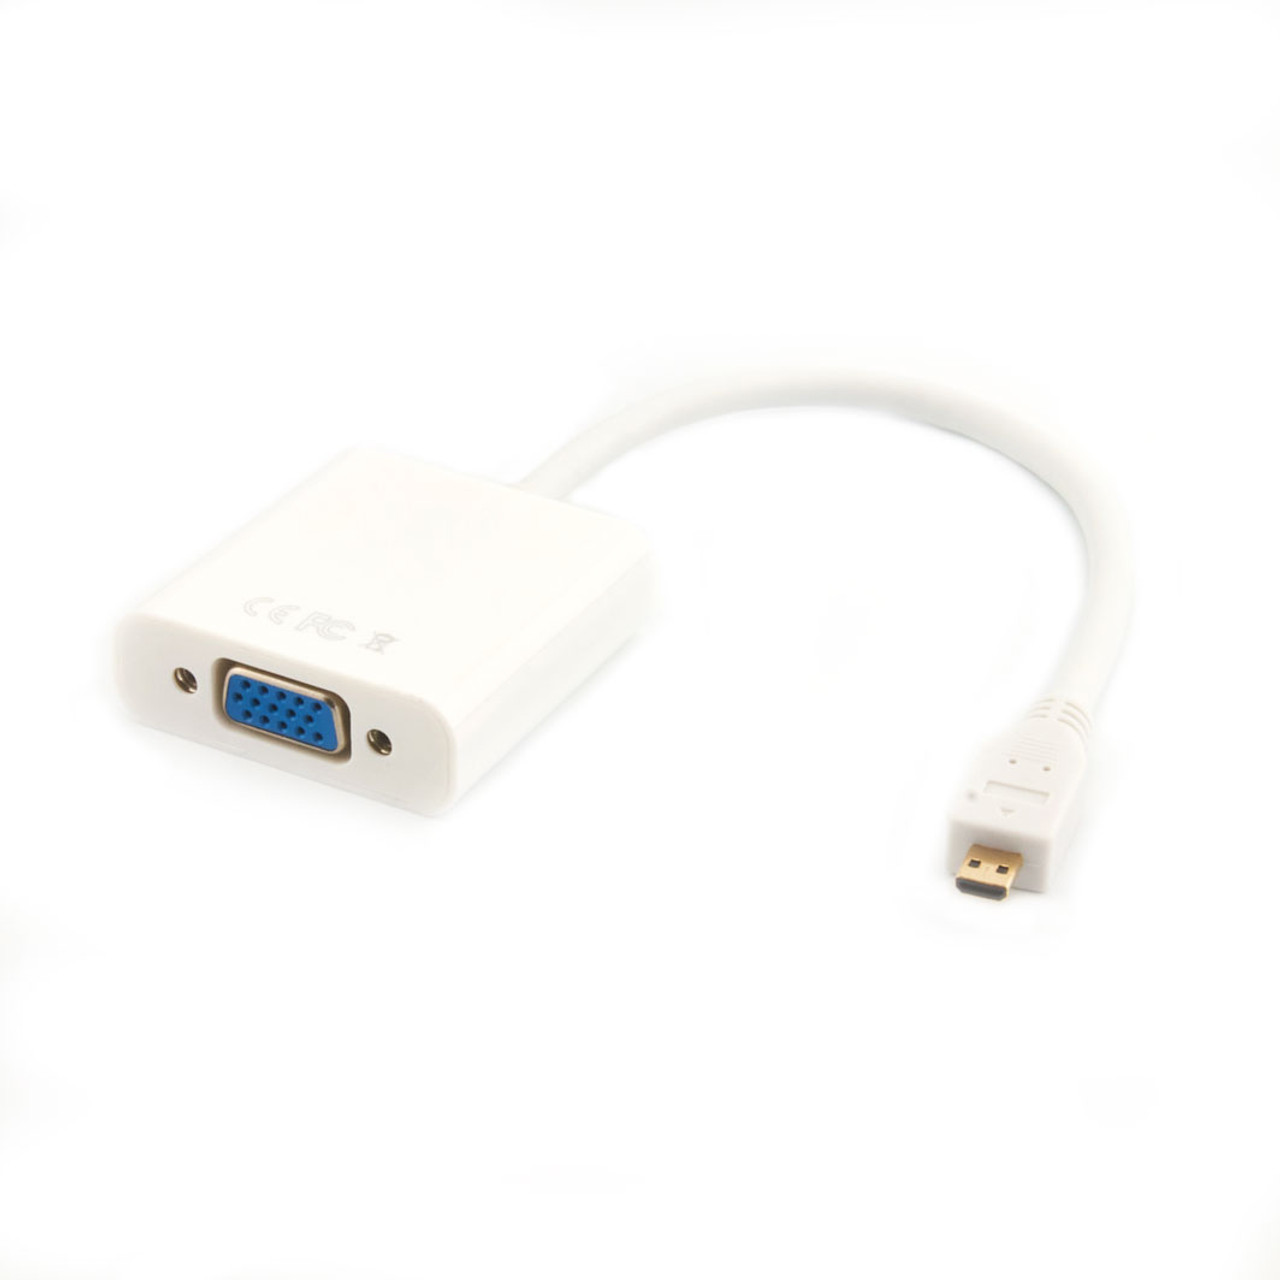 Convertisseur micro-HDMI vers VGA pour Raspberry Pi4